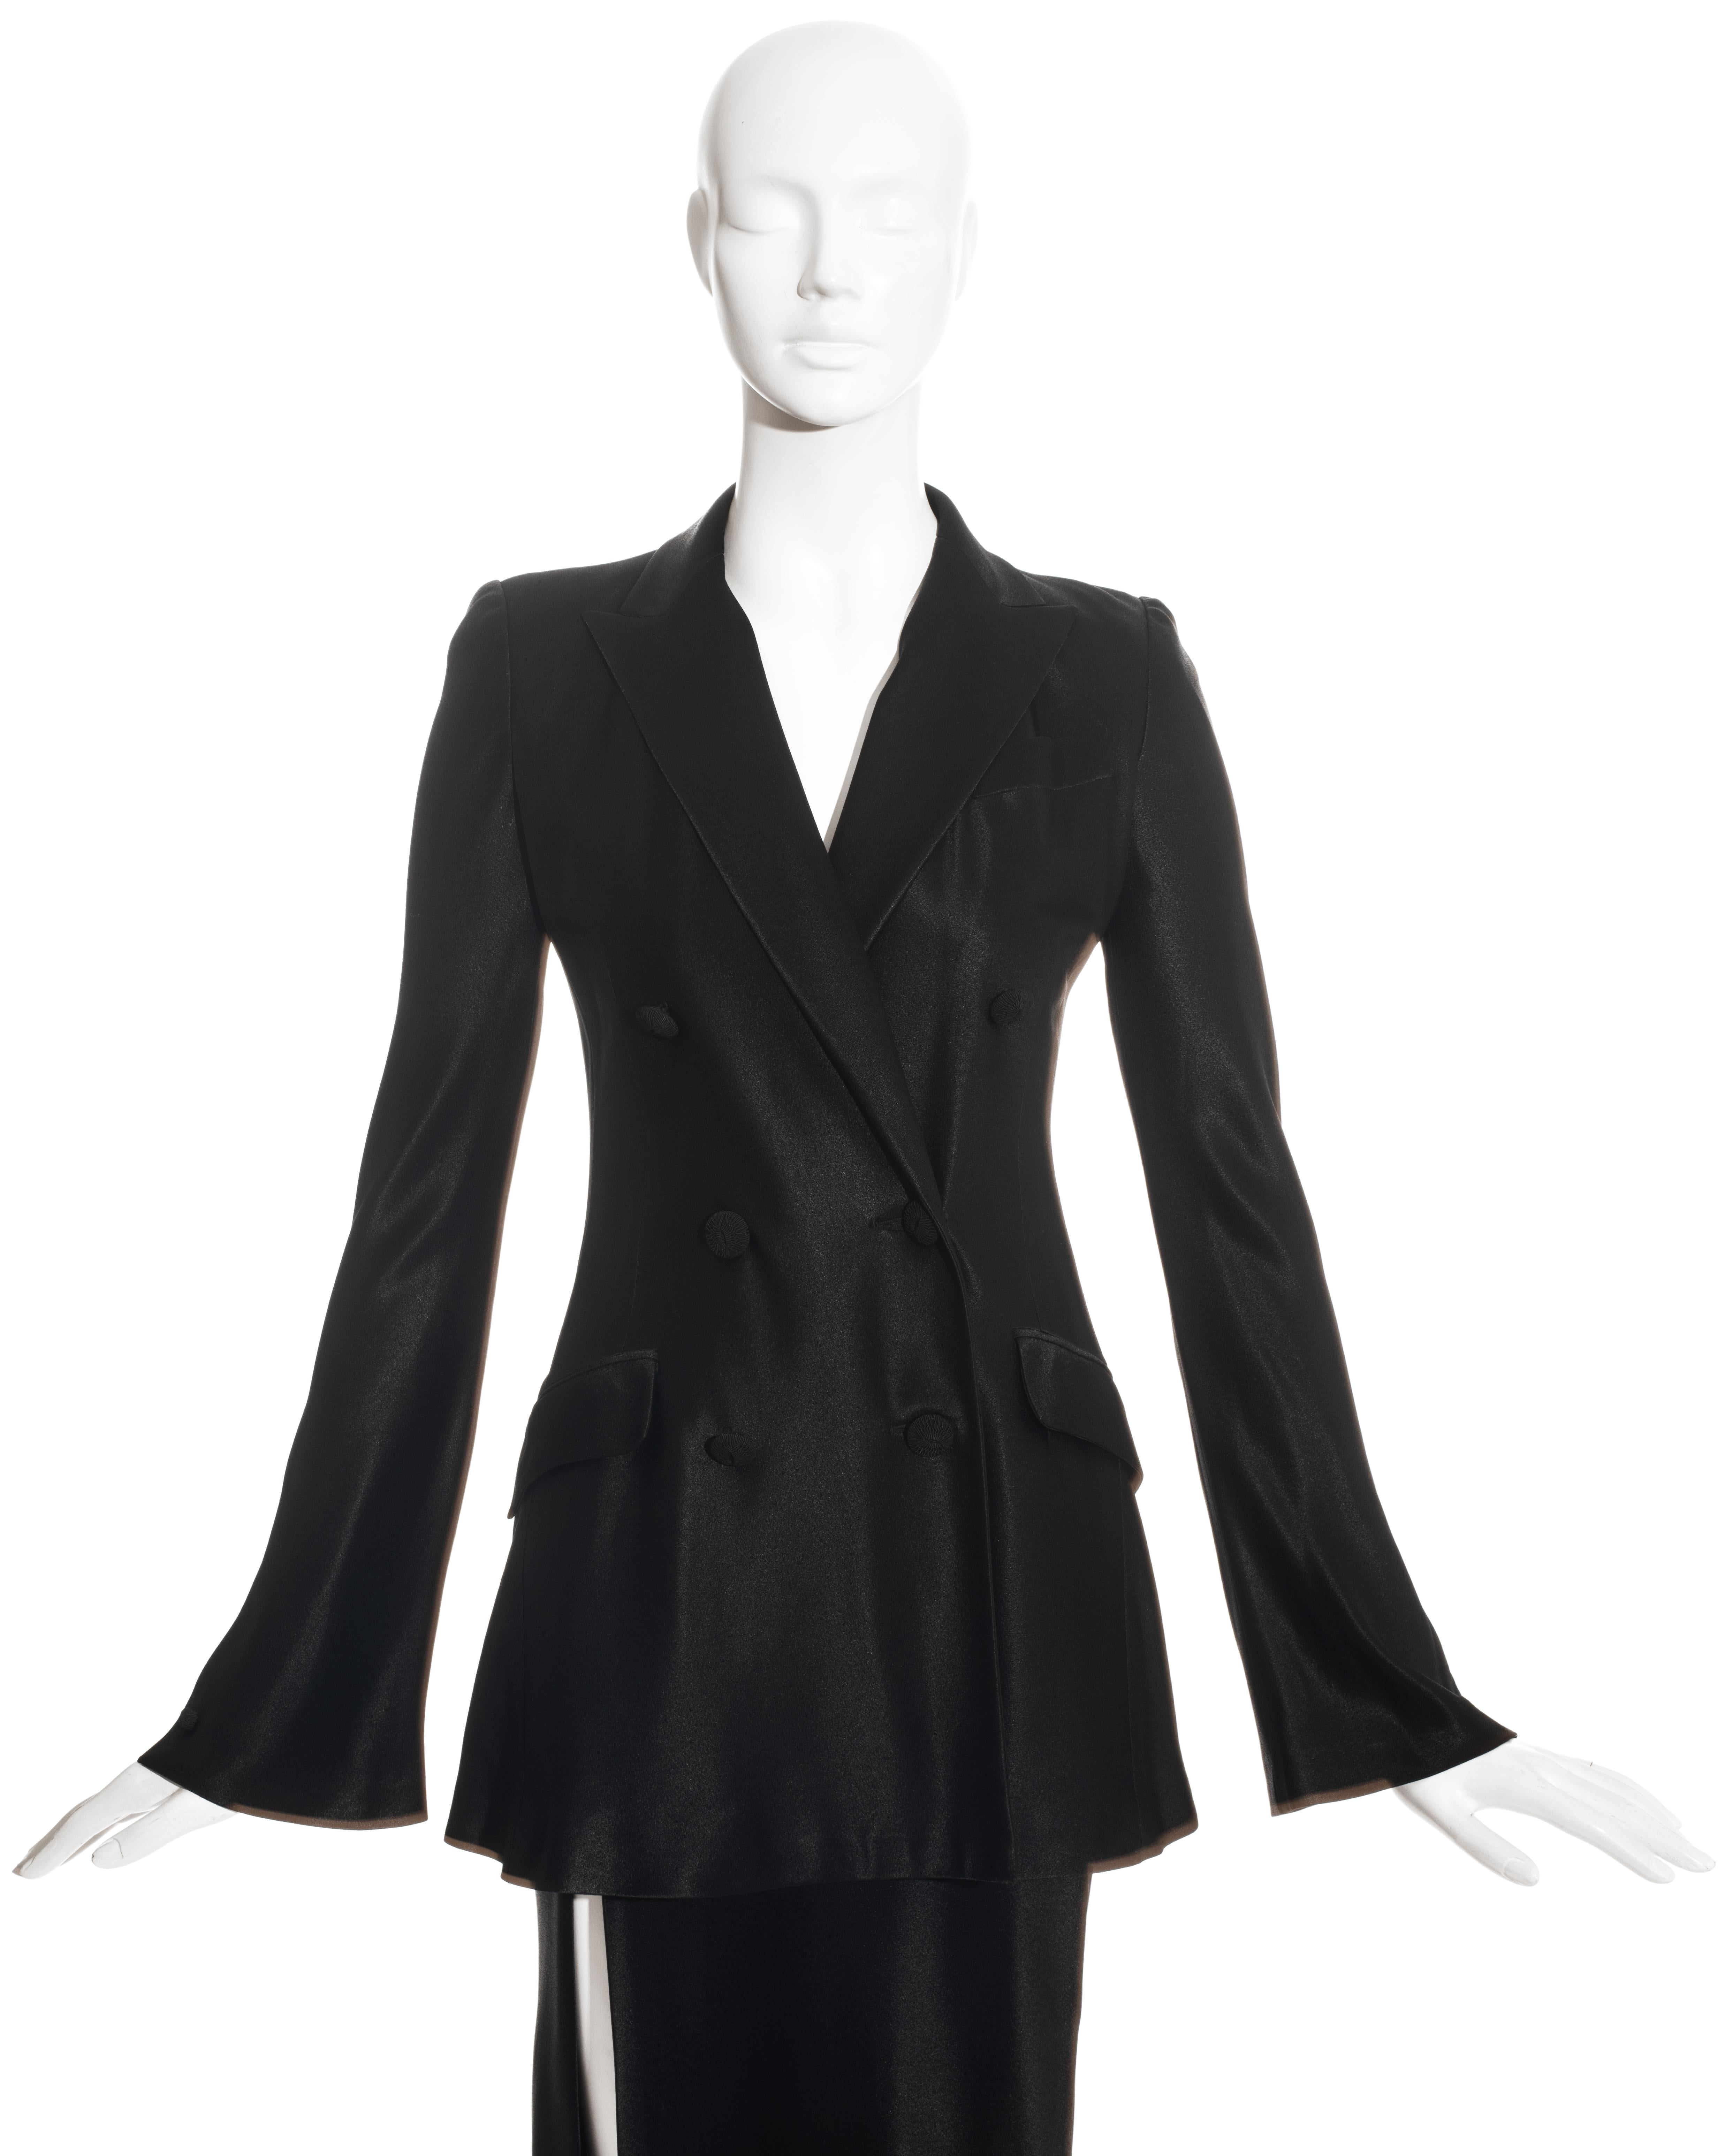 Black John Galliano black satin double breasted skirt suit with leg slit, fw 1994